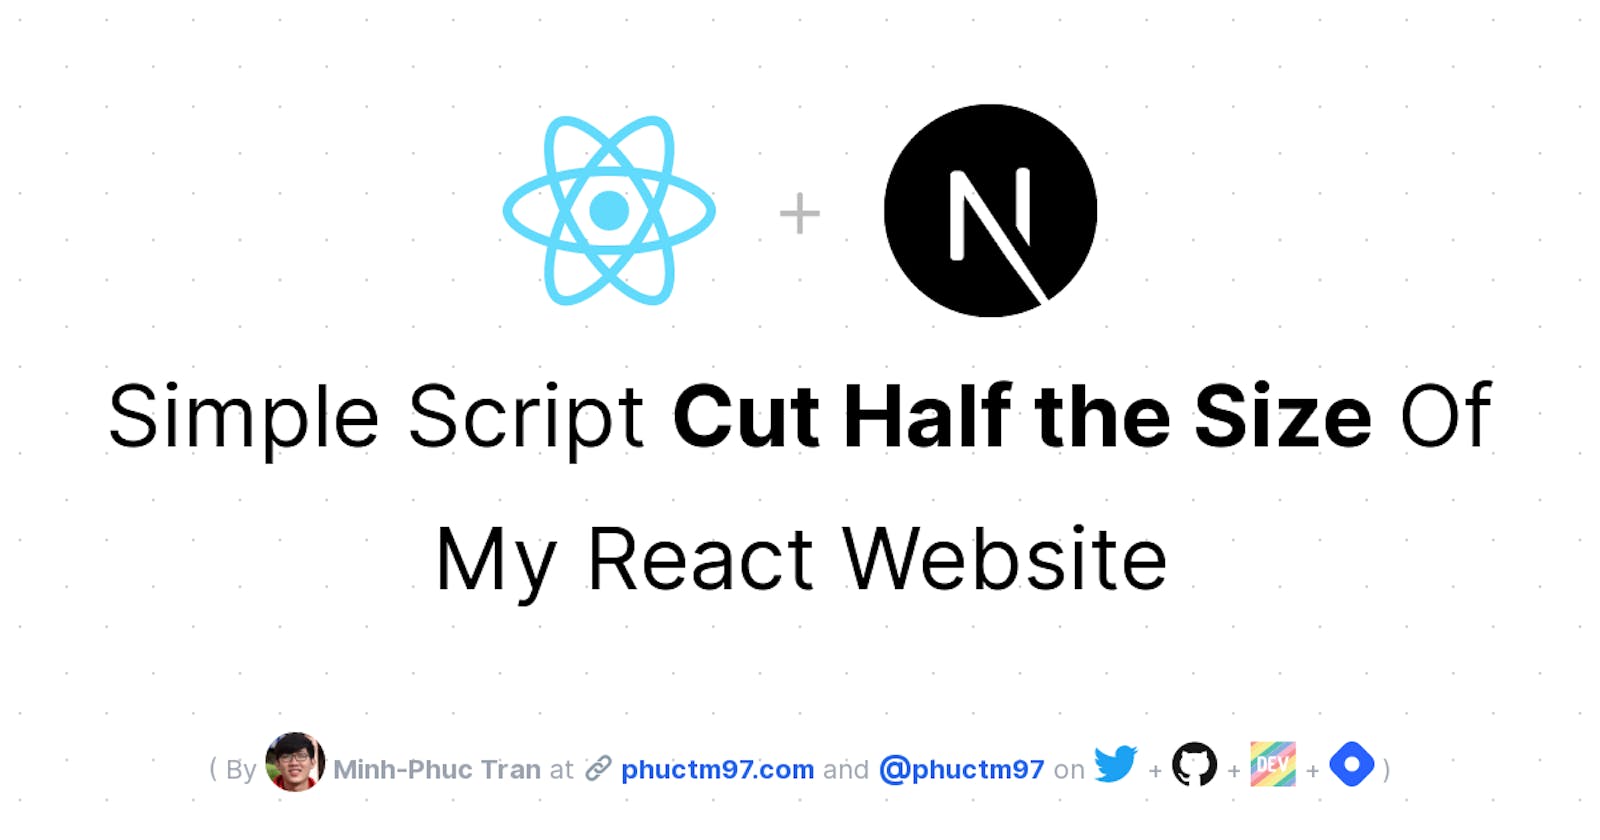 Simple Script Cut 50% Size Of My React Website